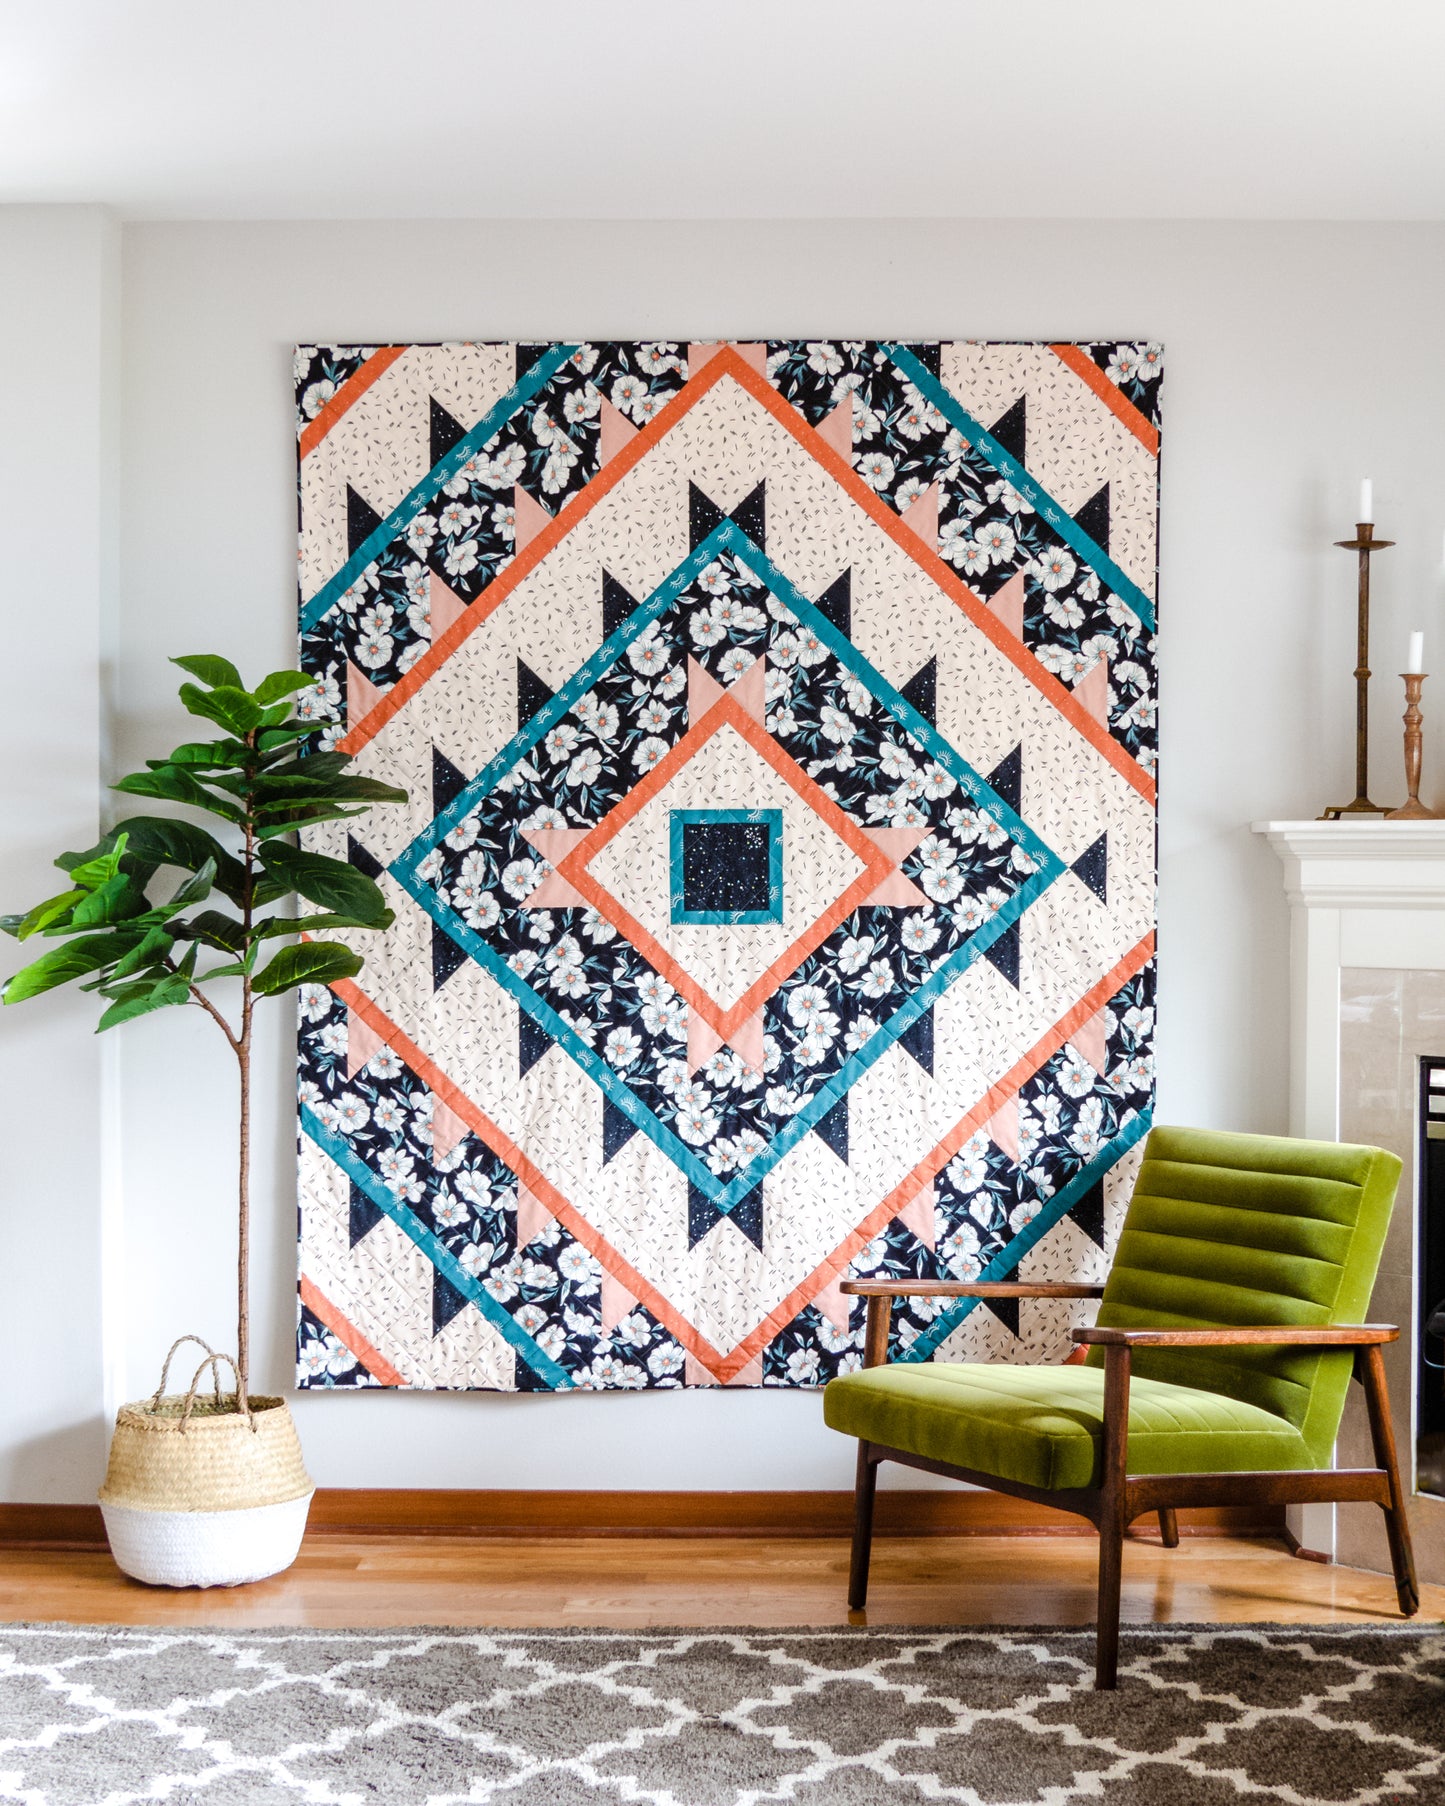 Green Lake Quilt Pattern - Julia Wachs Designs - A Green Lake quilt pattern hangs on a gray wall.